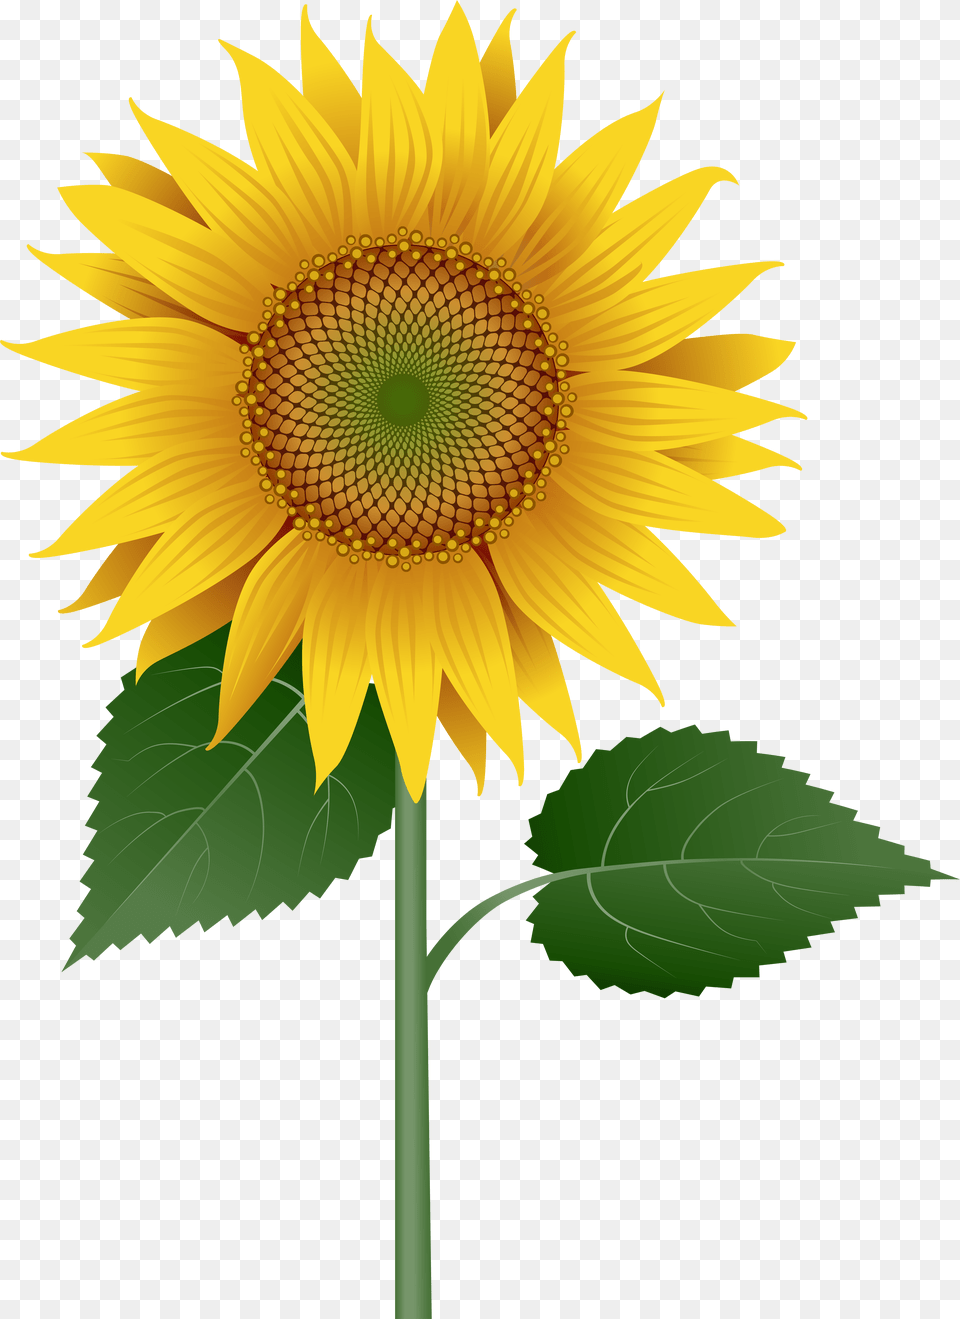 Sunflower Large Transparent Image Transparent Sunflower With Stem, Flower, Plant Png